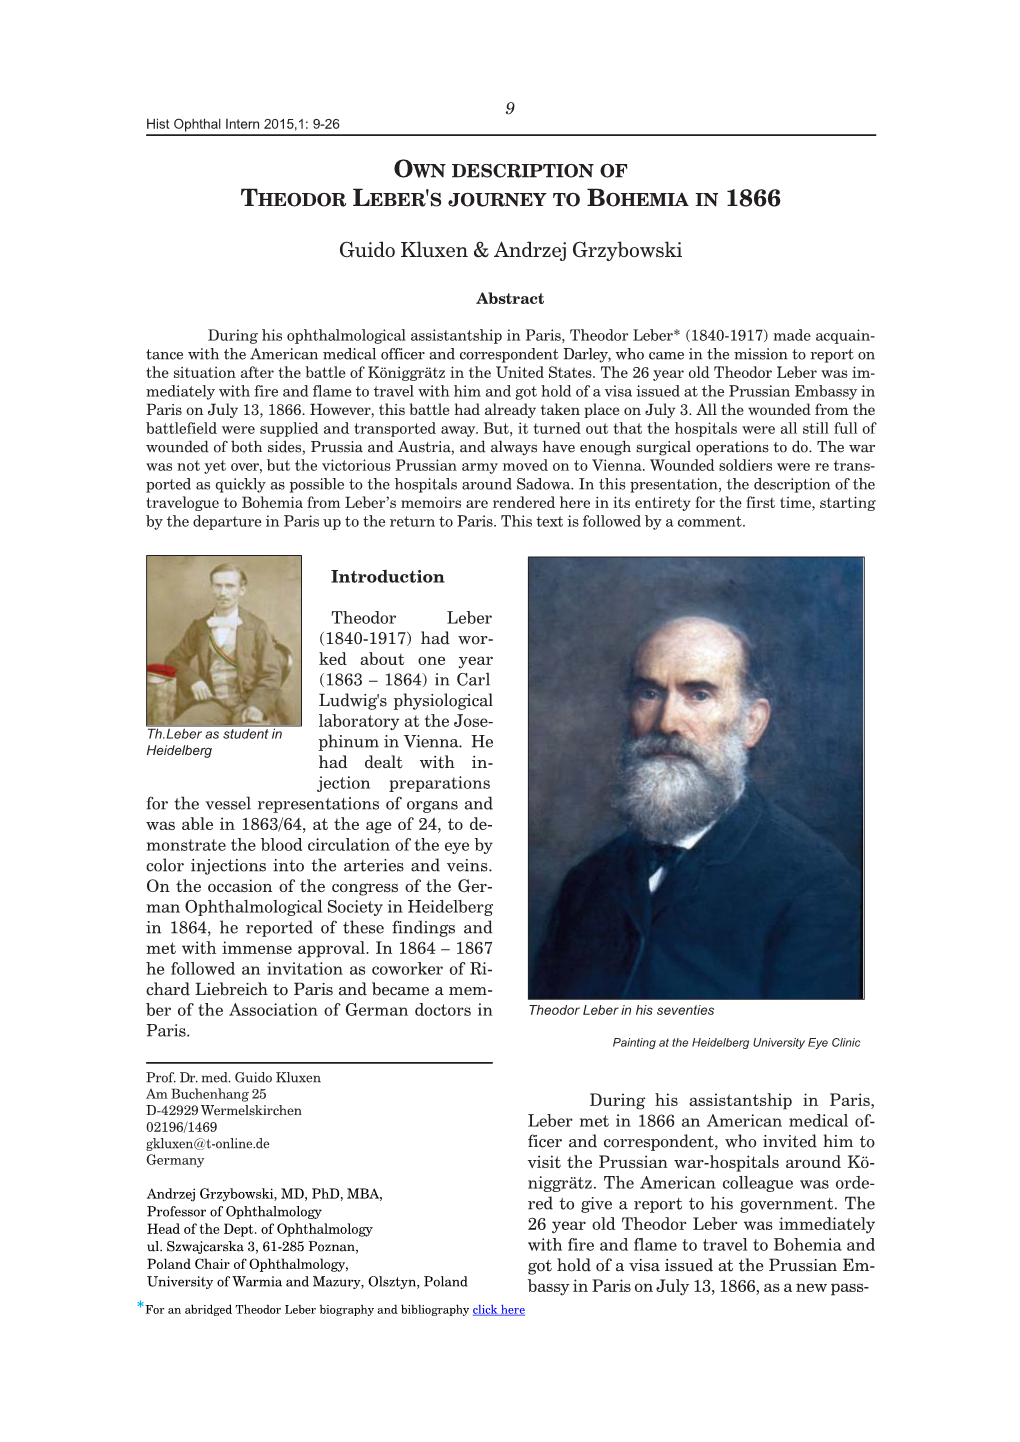 Own Description of Theodor Leber's Journey to Bohemia in 1866